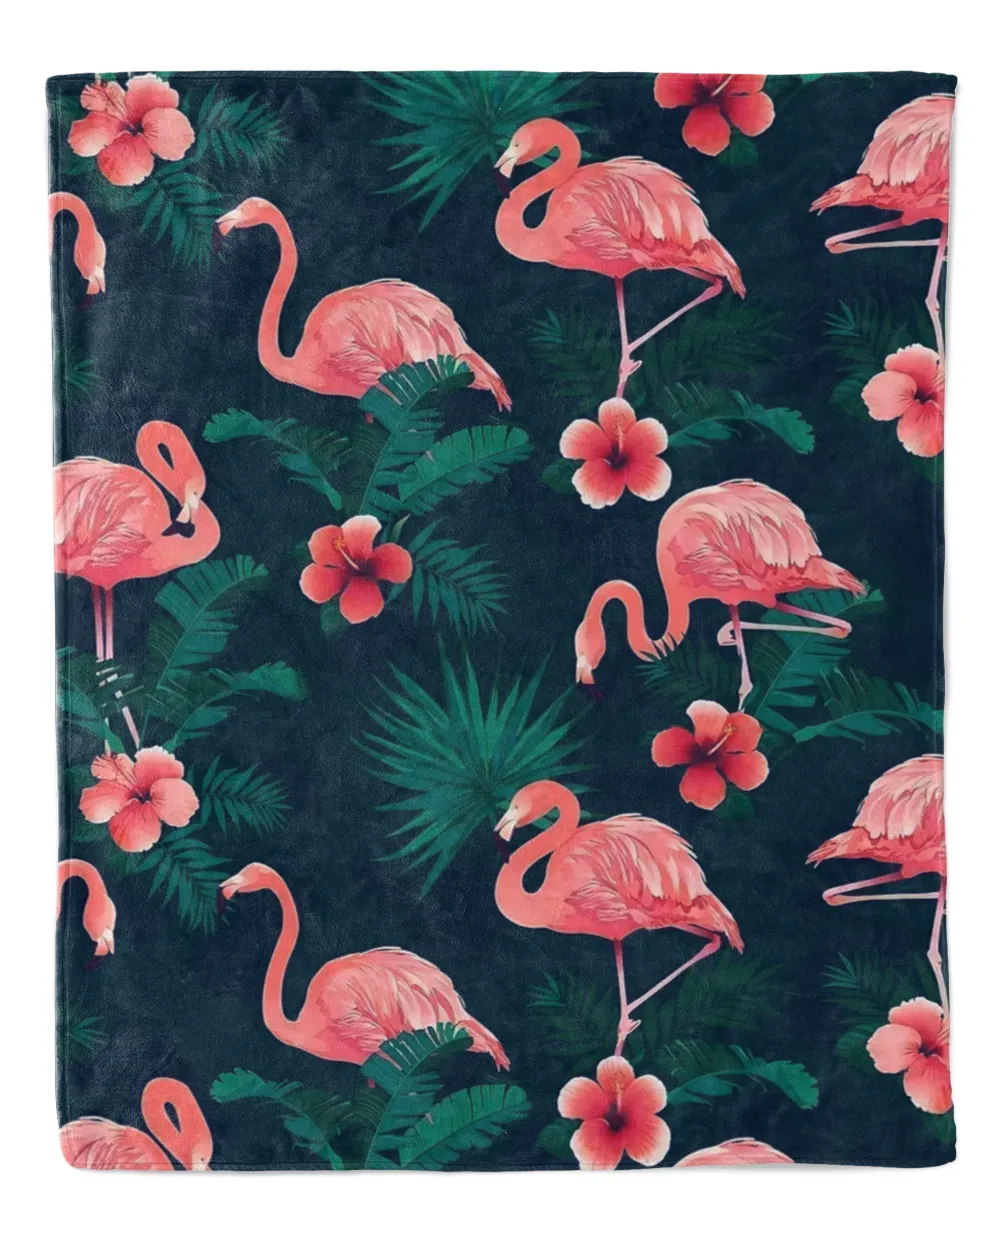 Flamingo Blanket, Flamingo Fleece Blanket, Flamingo Adult Blanket, Best Gift For Decor